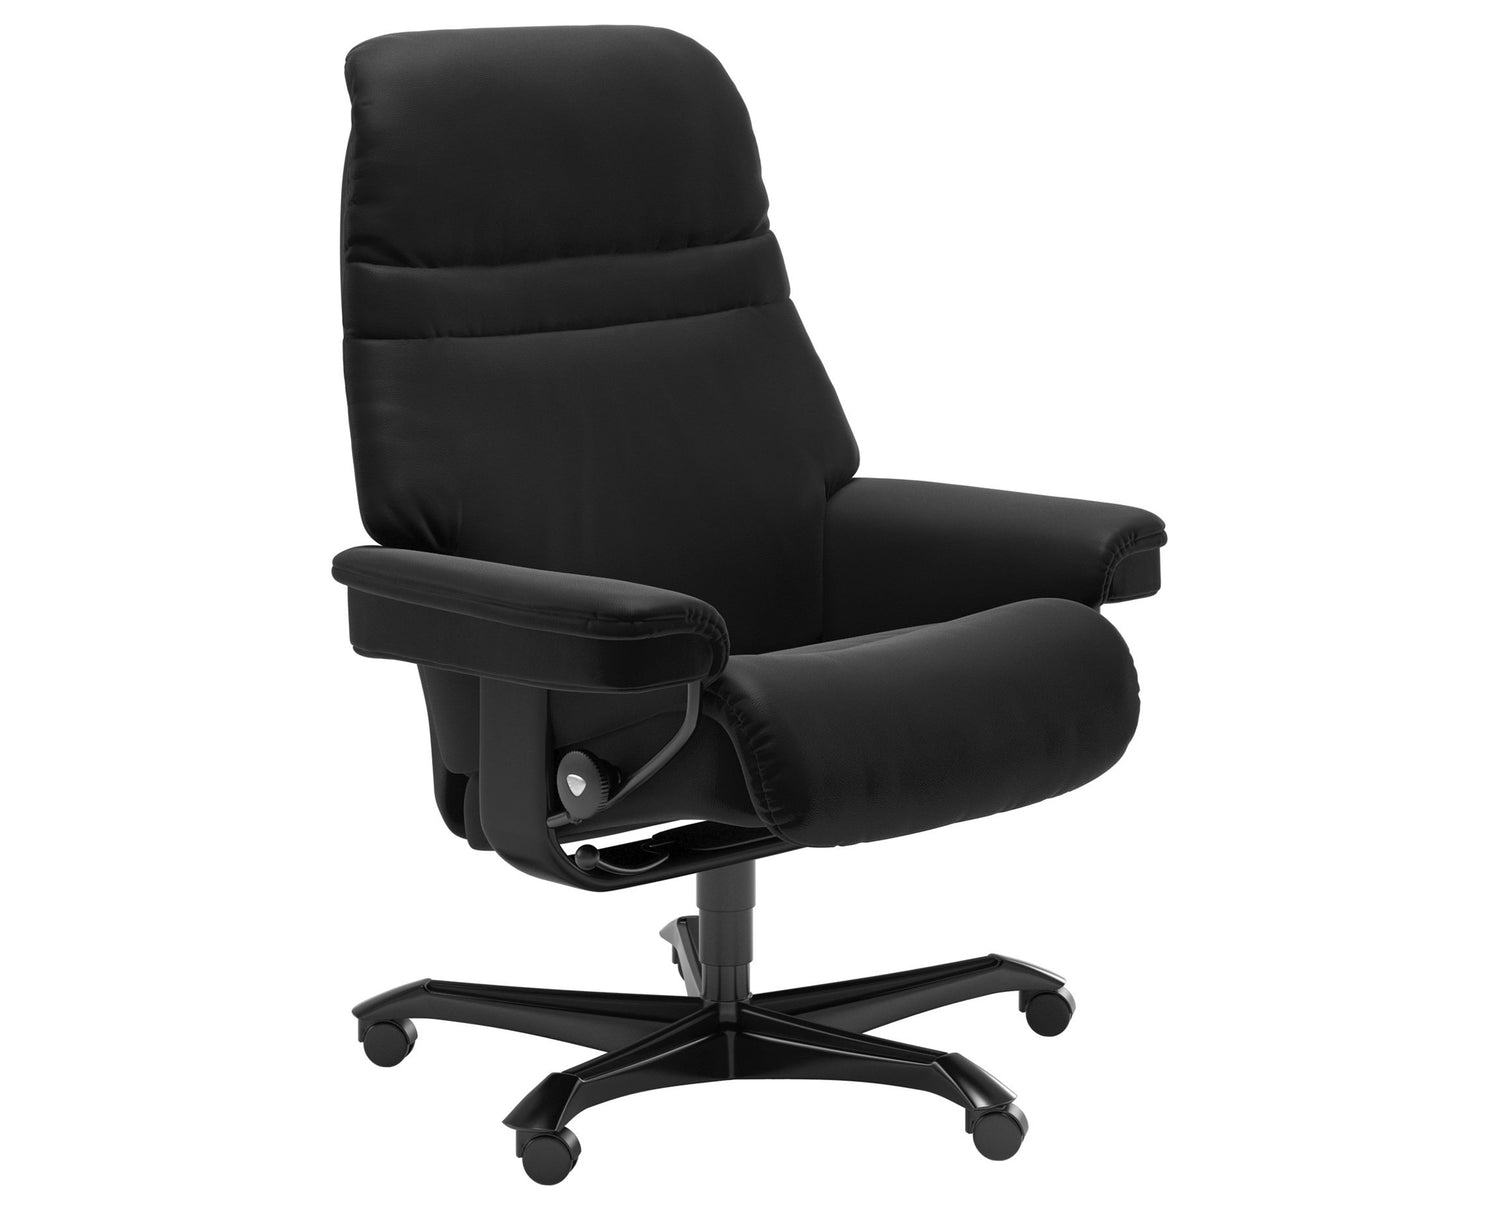 Paloma Leather Black M & Black Base | Stressless Sunrise Home Office Chair | Valley Ridge Furniture